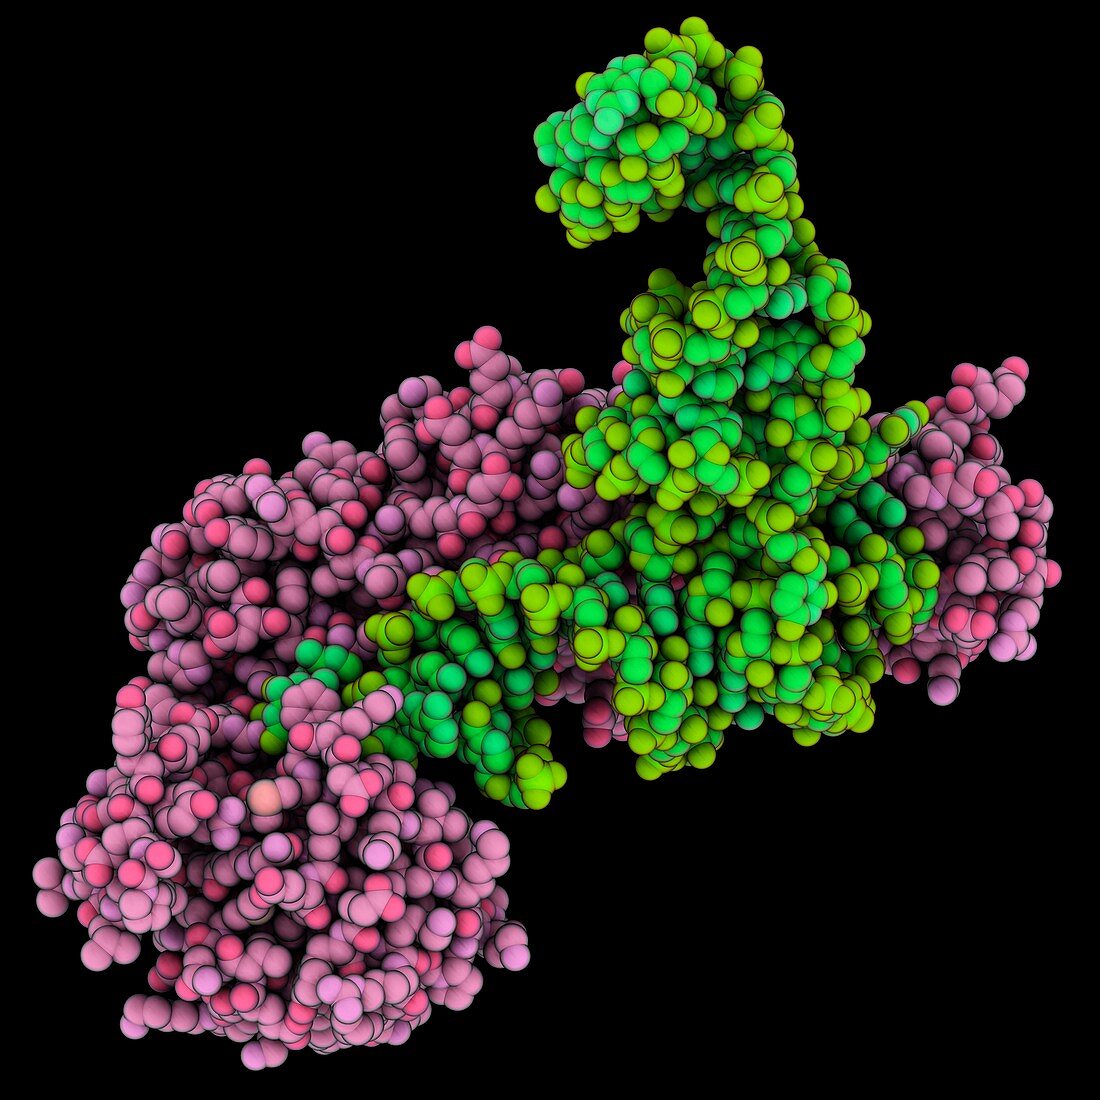 CCA-adding enzyme complex